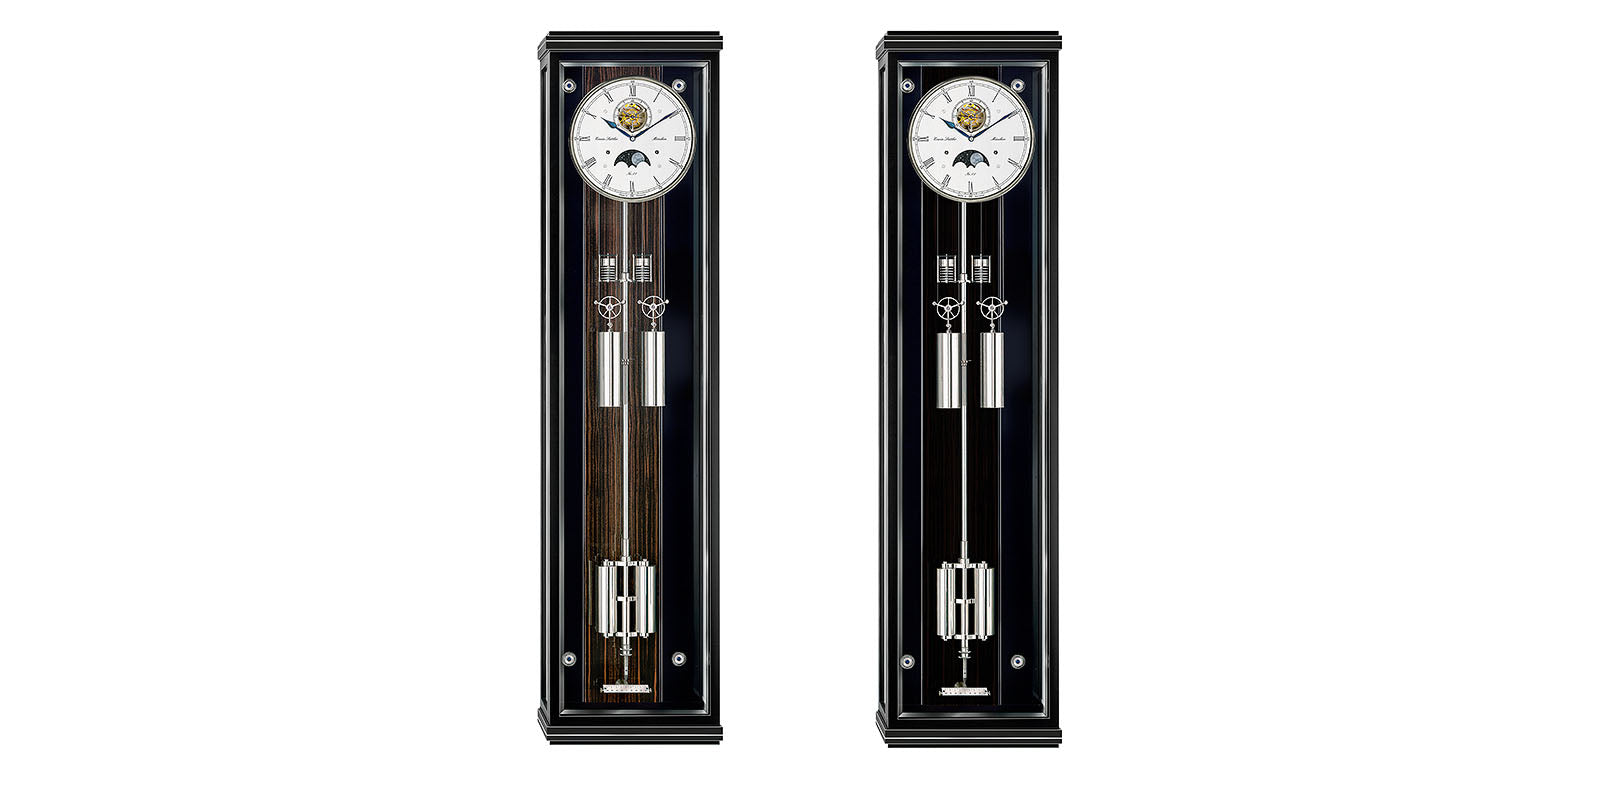 Erwin Sattler Secunda Sonata The Clock Moon Precision with Pendulum Modern Luxury – Well